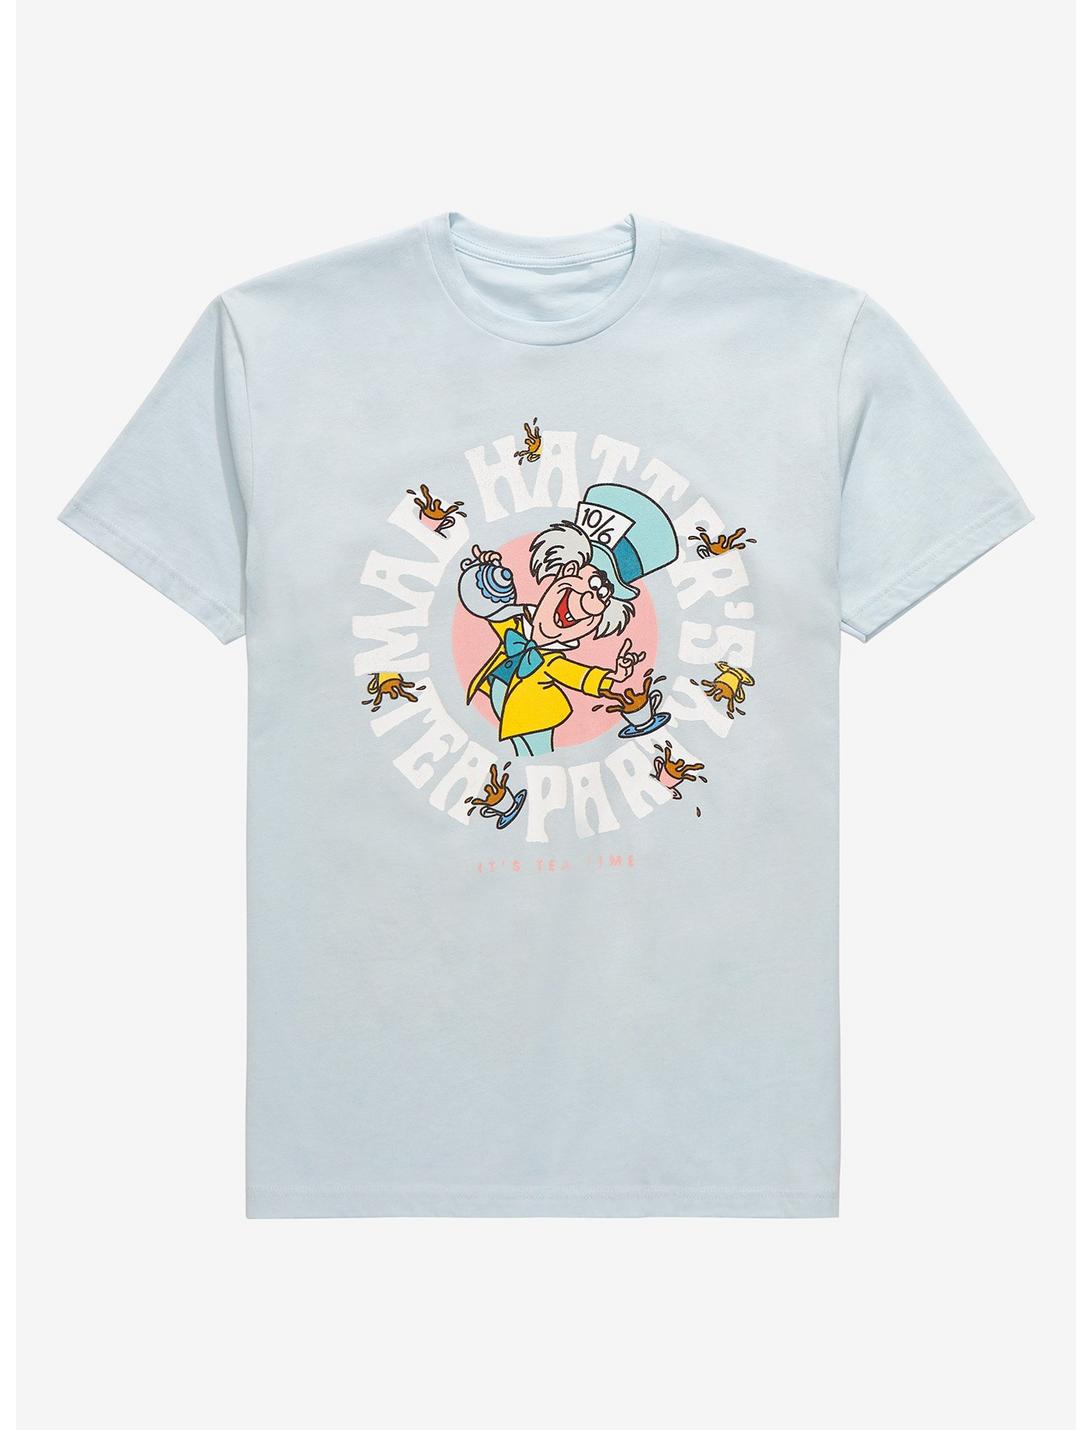 Disney Alice in Wonderland Mad Hatter Circle Portrait T-Shirt - BoxLunch Exclusive , LIGHT BLUE, hi-res